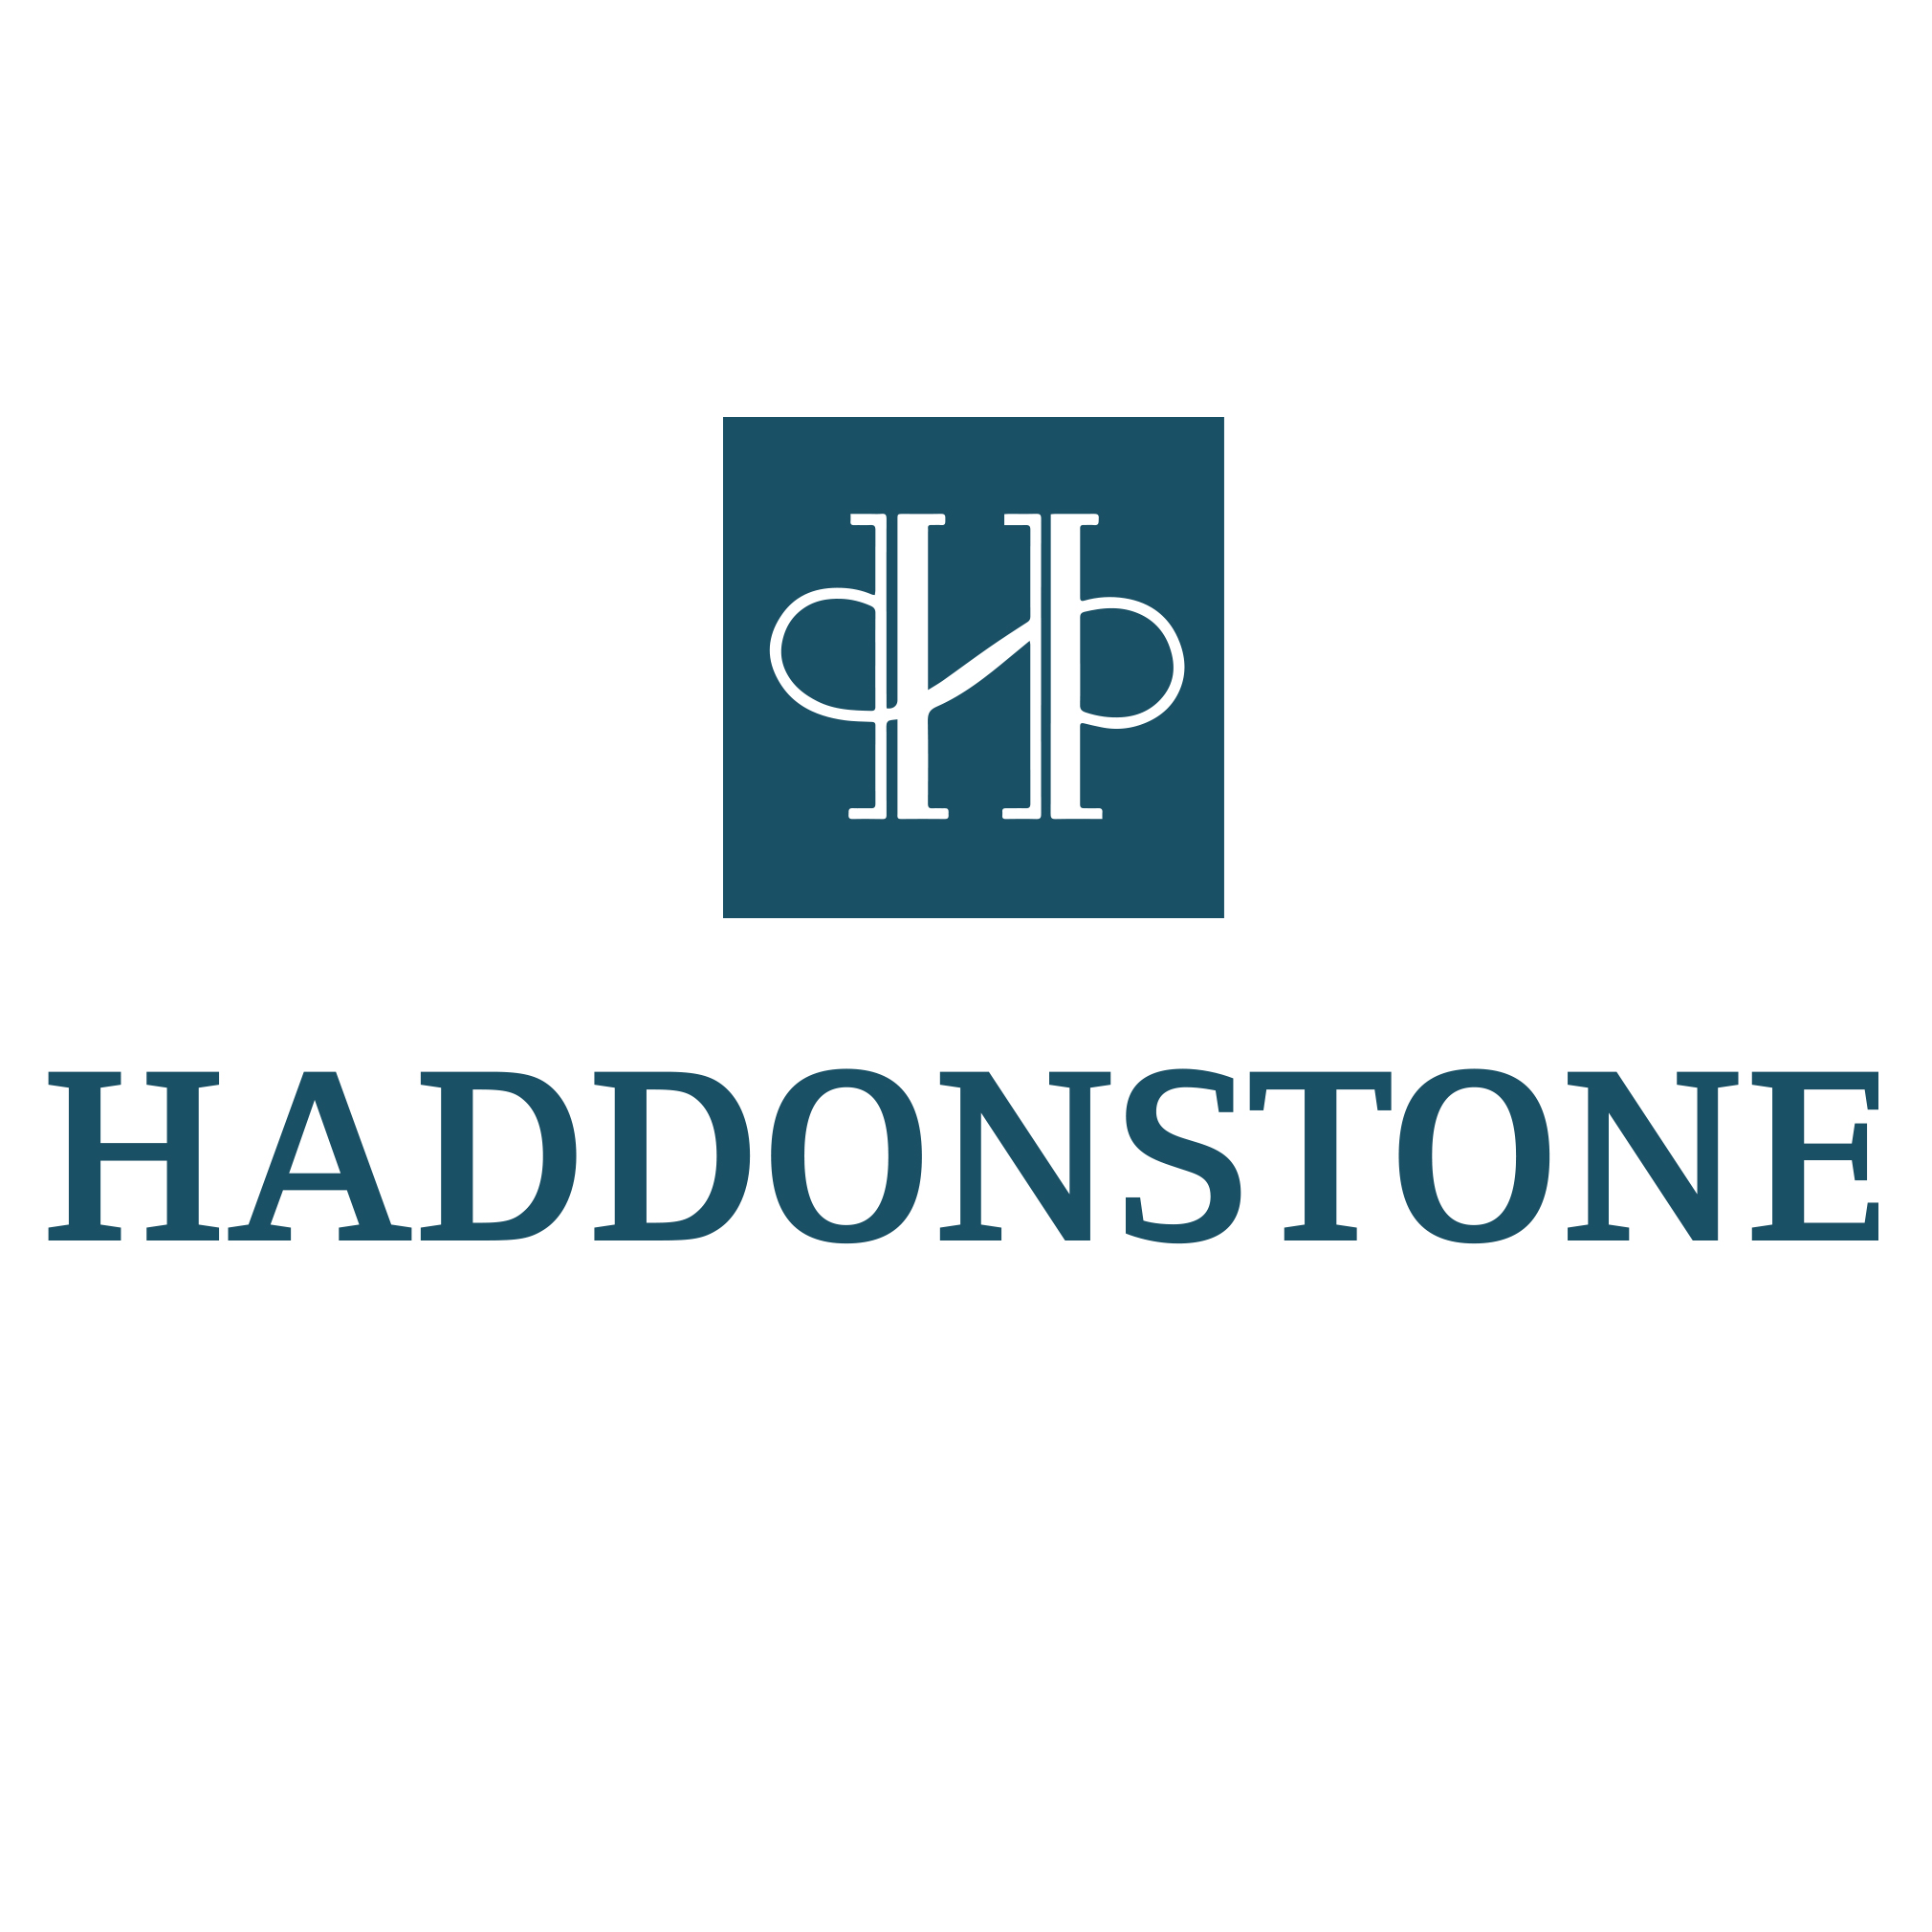 Haddonstone brand logo.